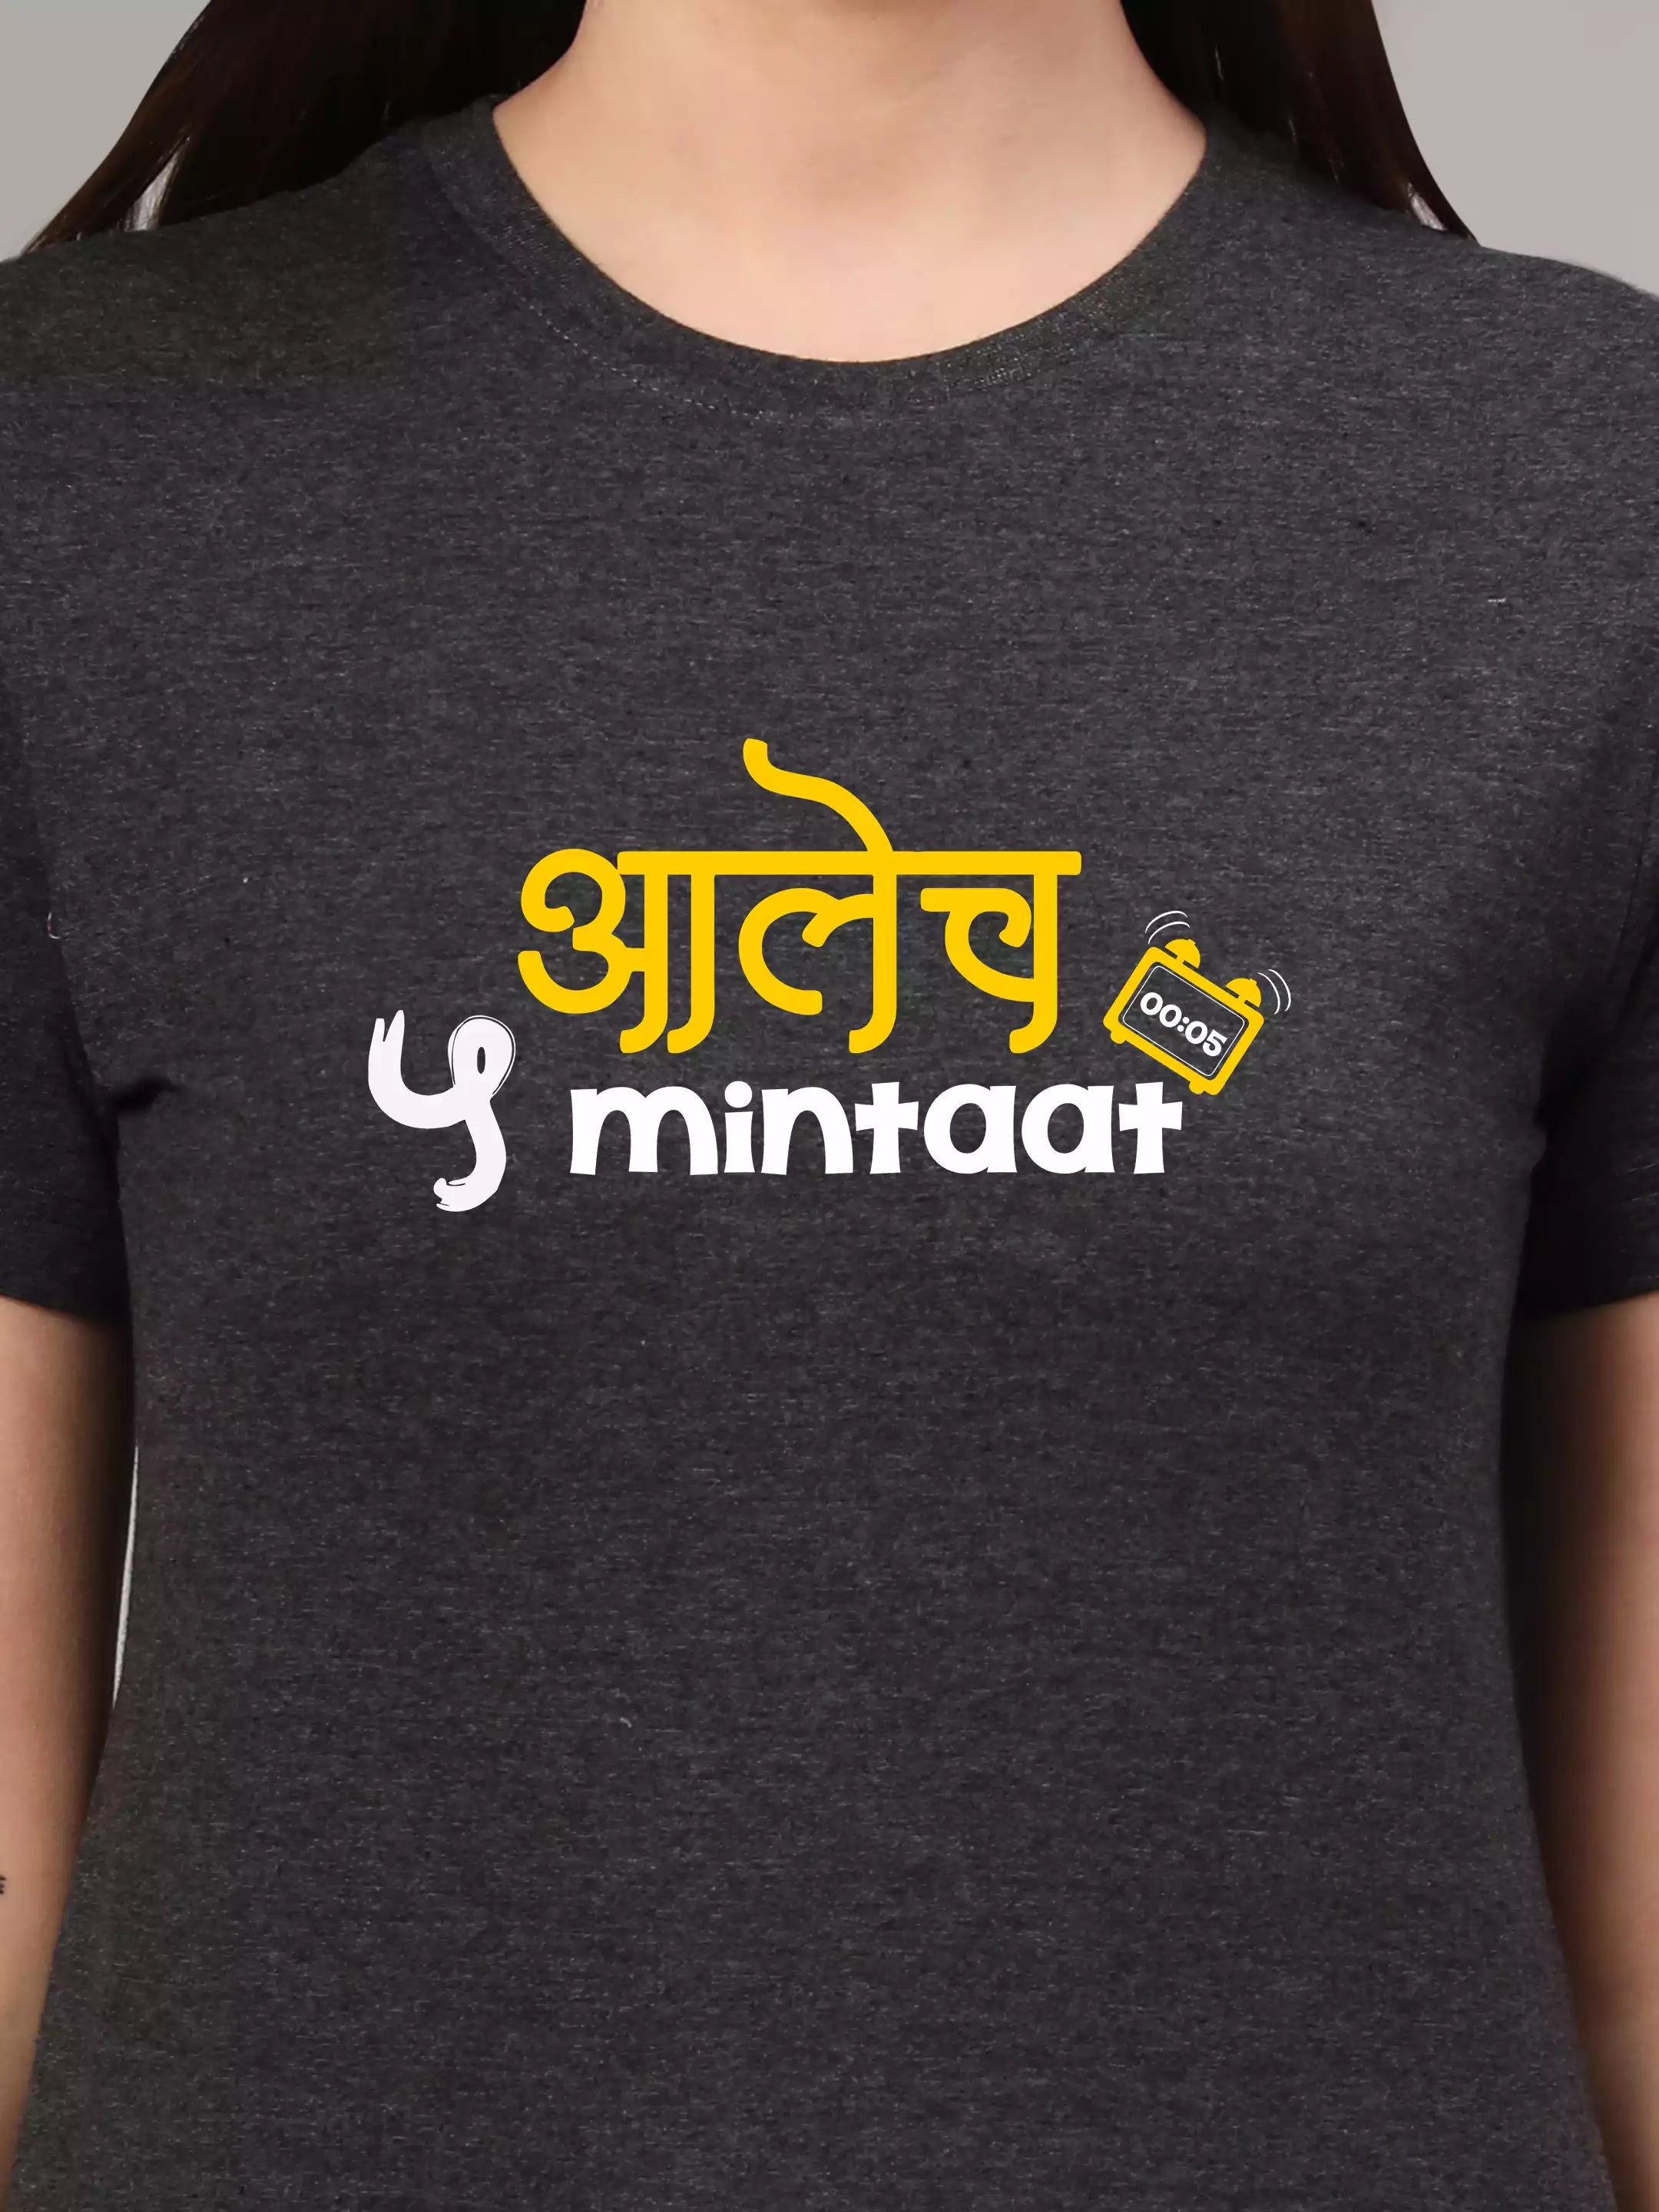 Aalech 5 mintat - Sukhiaatma Unisex Marathi Graphic Printed Black  T-shirt